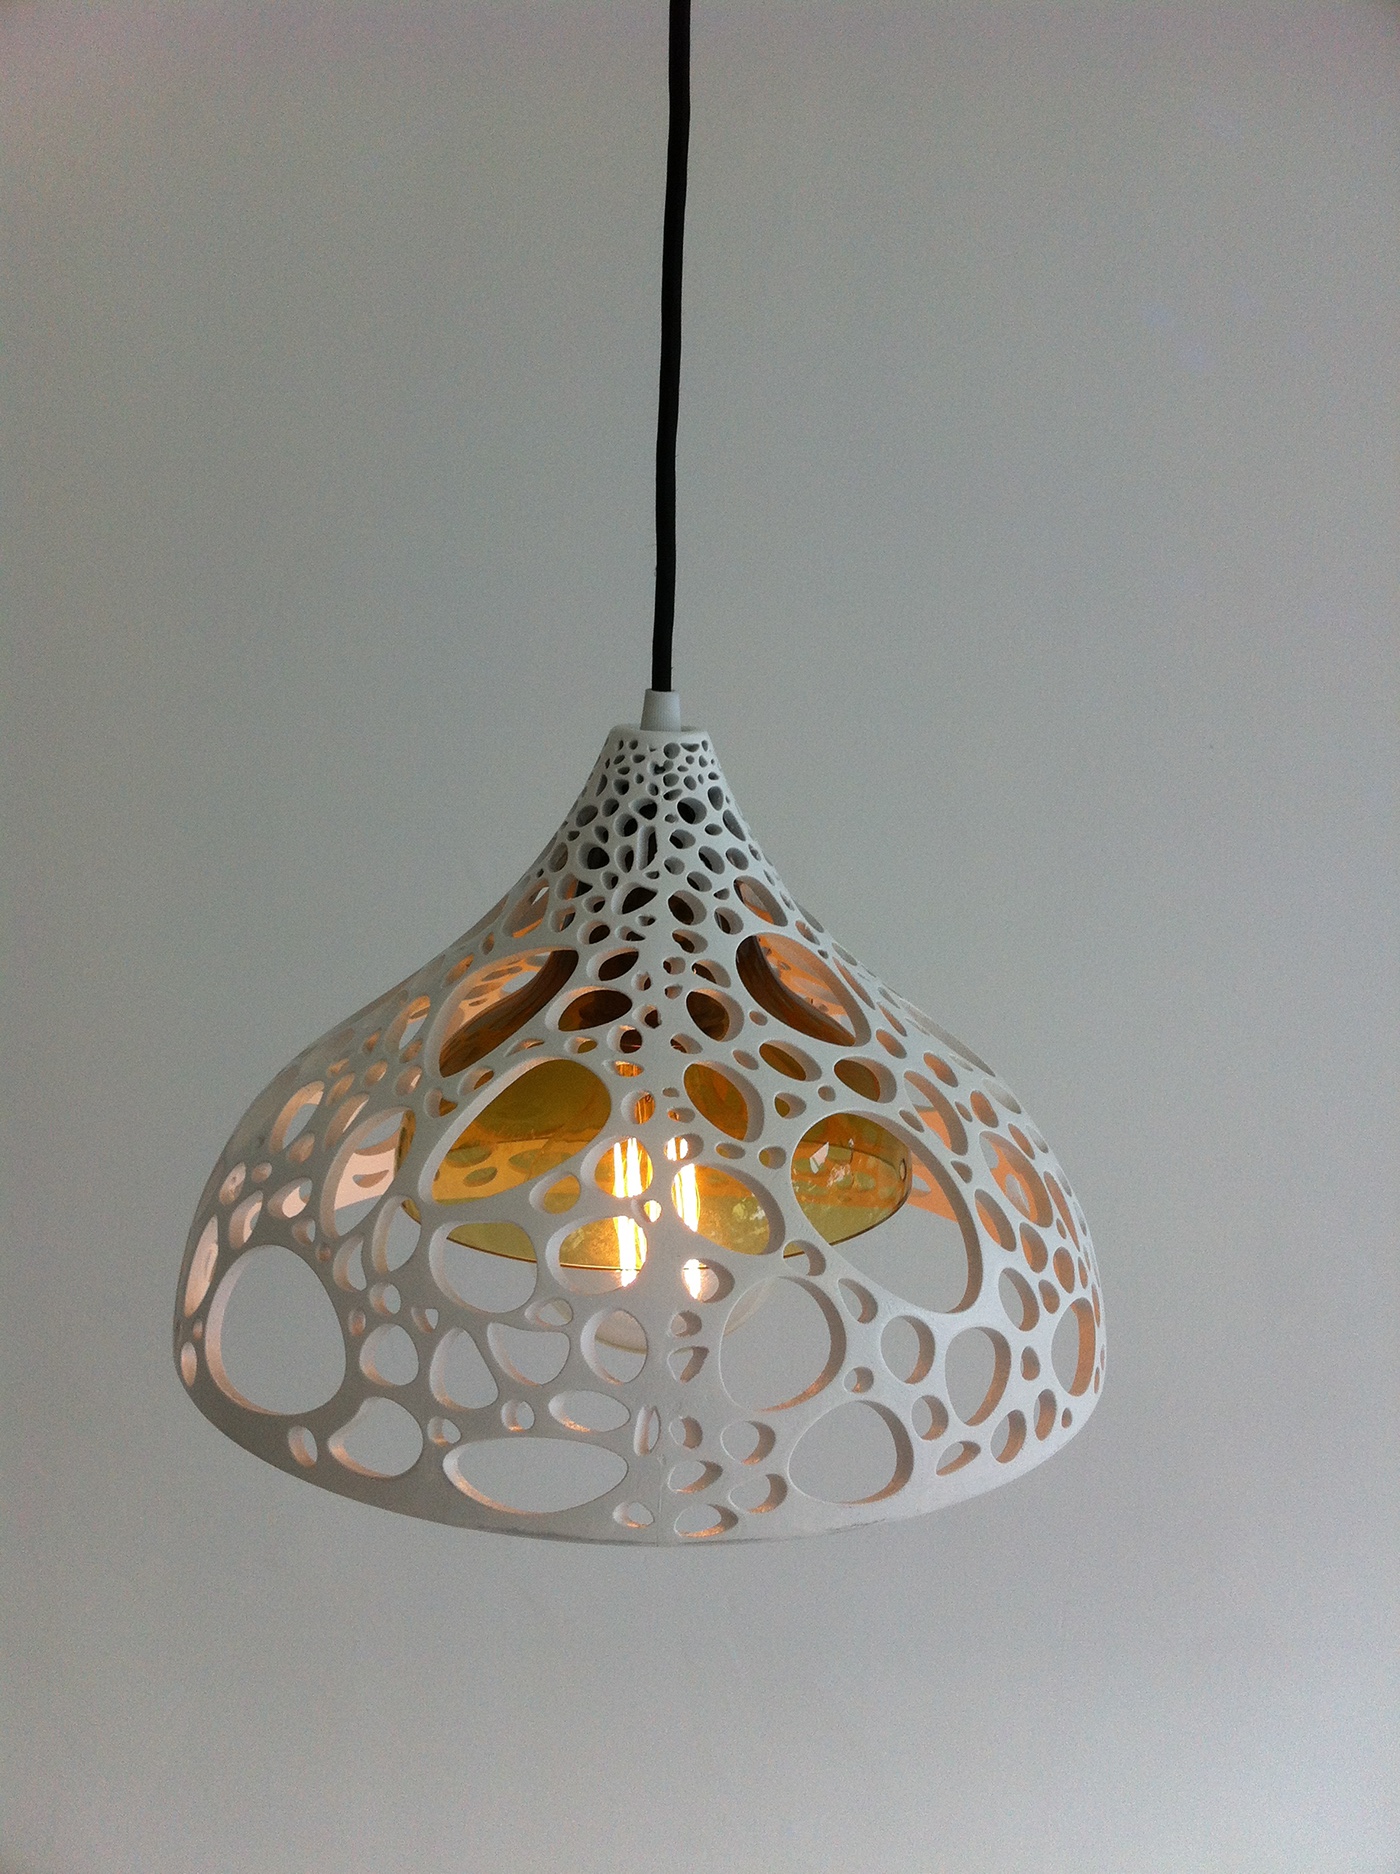 Alga algae design light pendant furniture lighting amazing award Interior for sale product organic light bulb creative